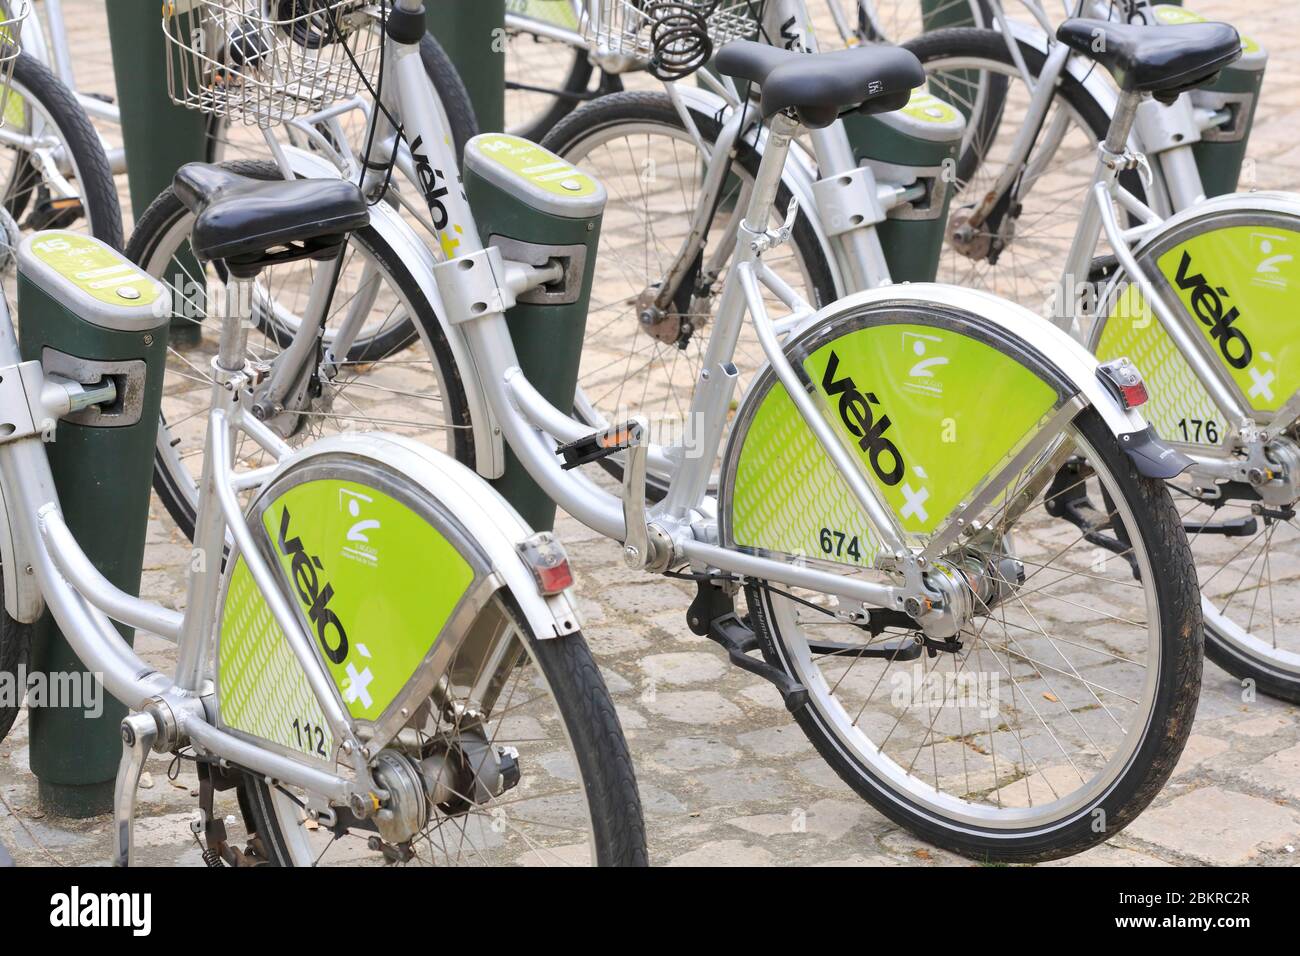 France, Loiret, Orleans, self-service rental bikes (called Velo +) Stock Photo